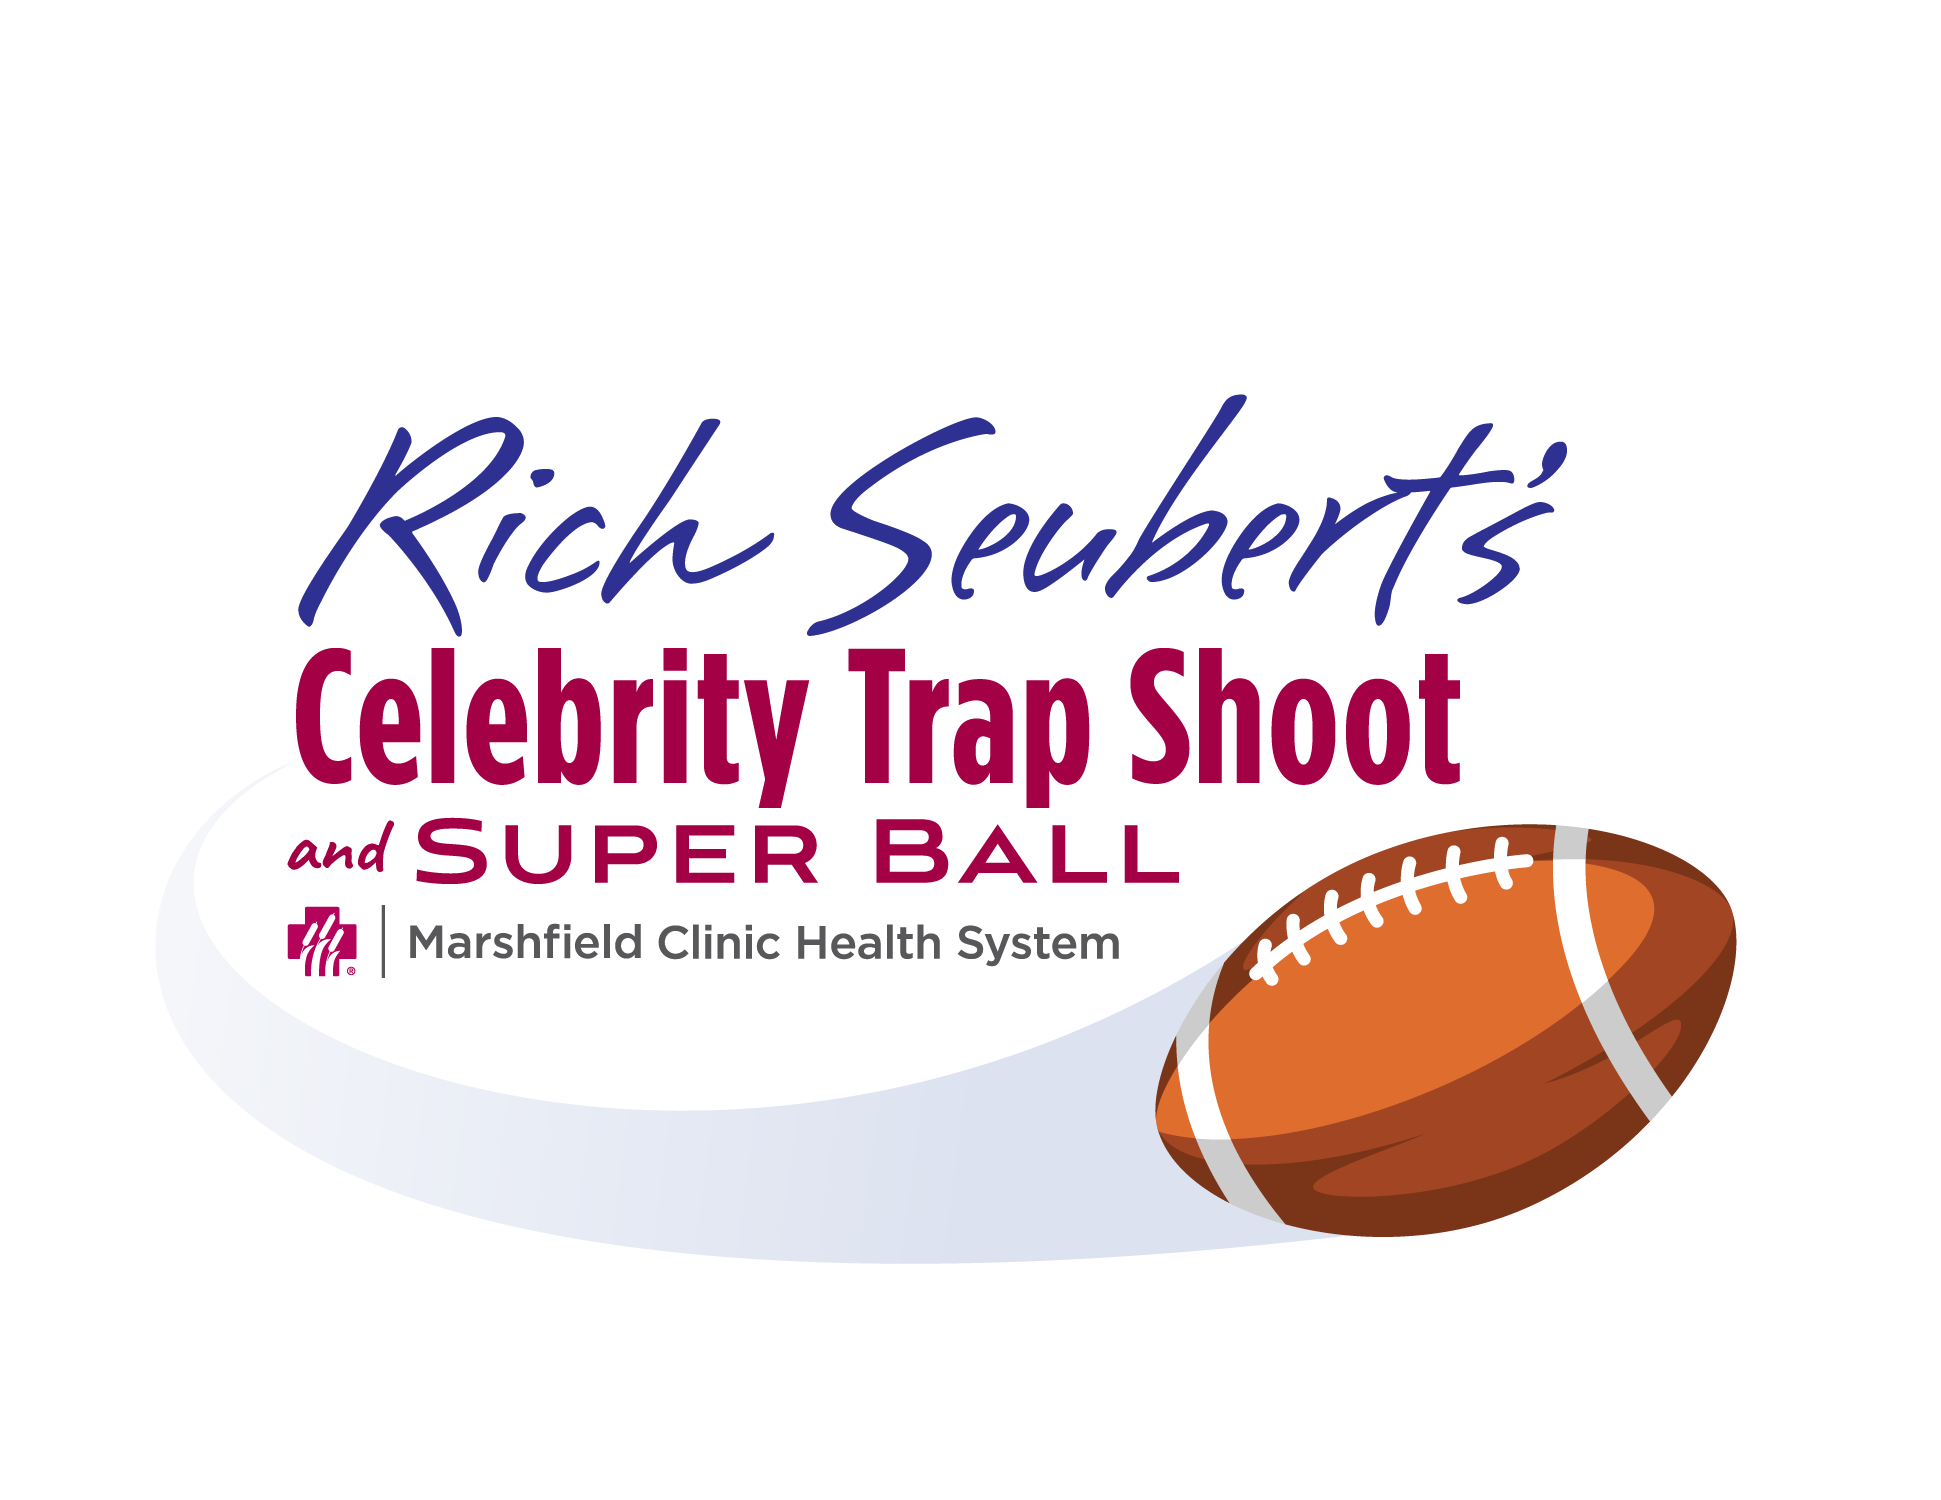 Rich Seubert's Celebrity Trap Shoot